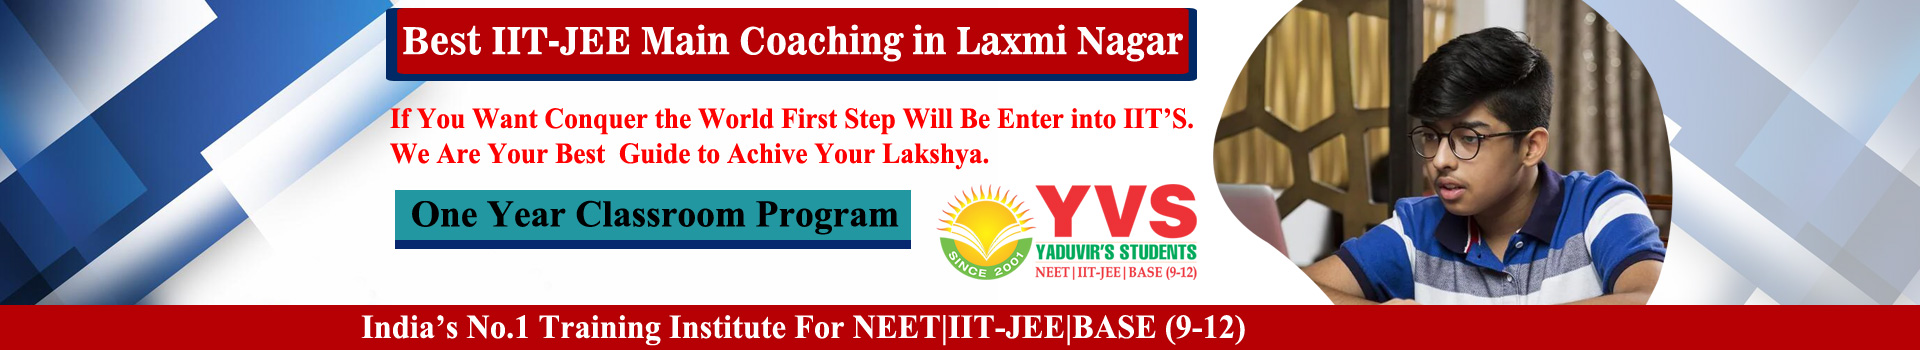 Best IIT-JEE Main Coaching in Laxmi Nagar